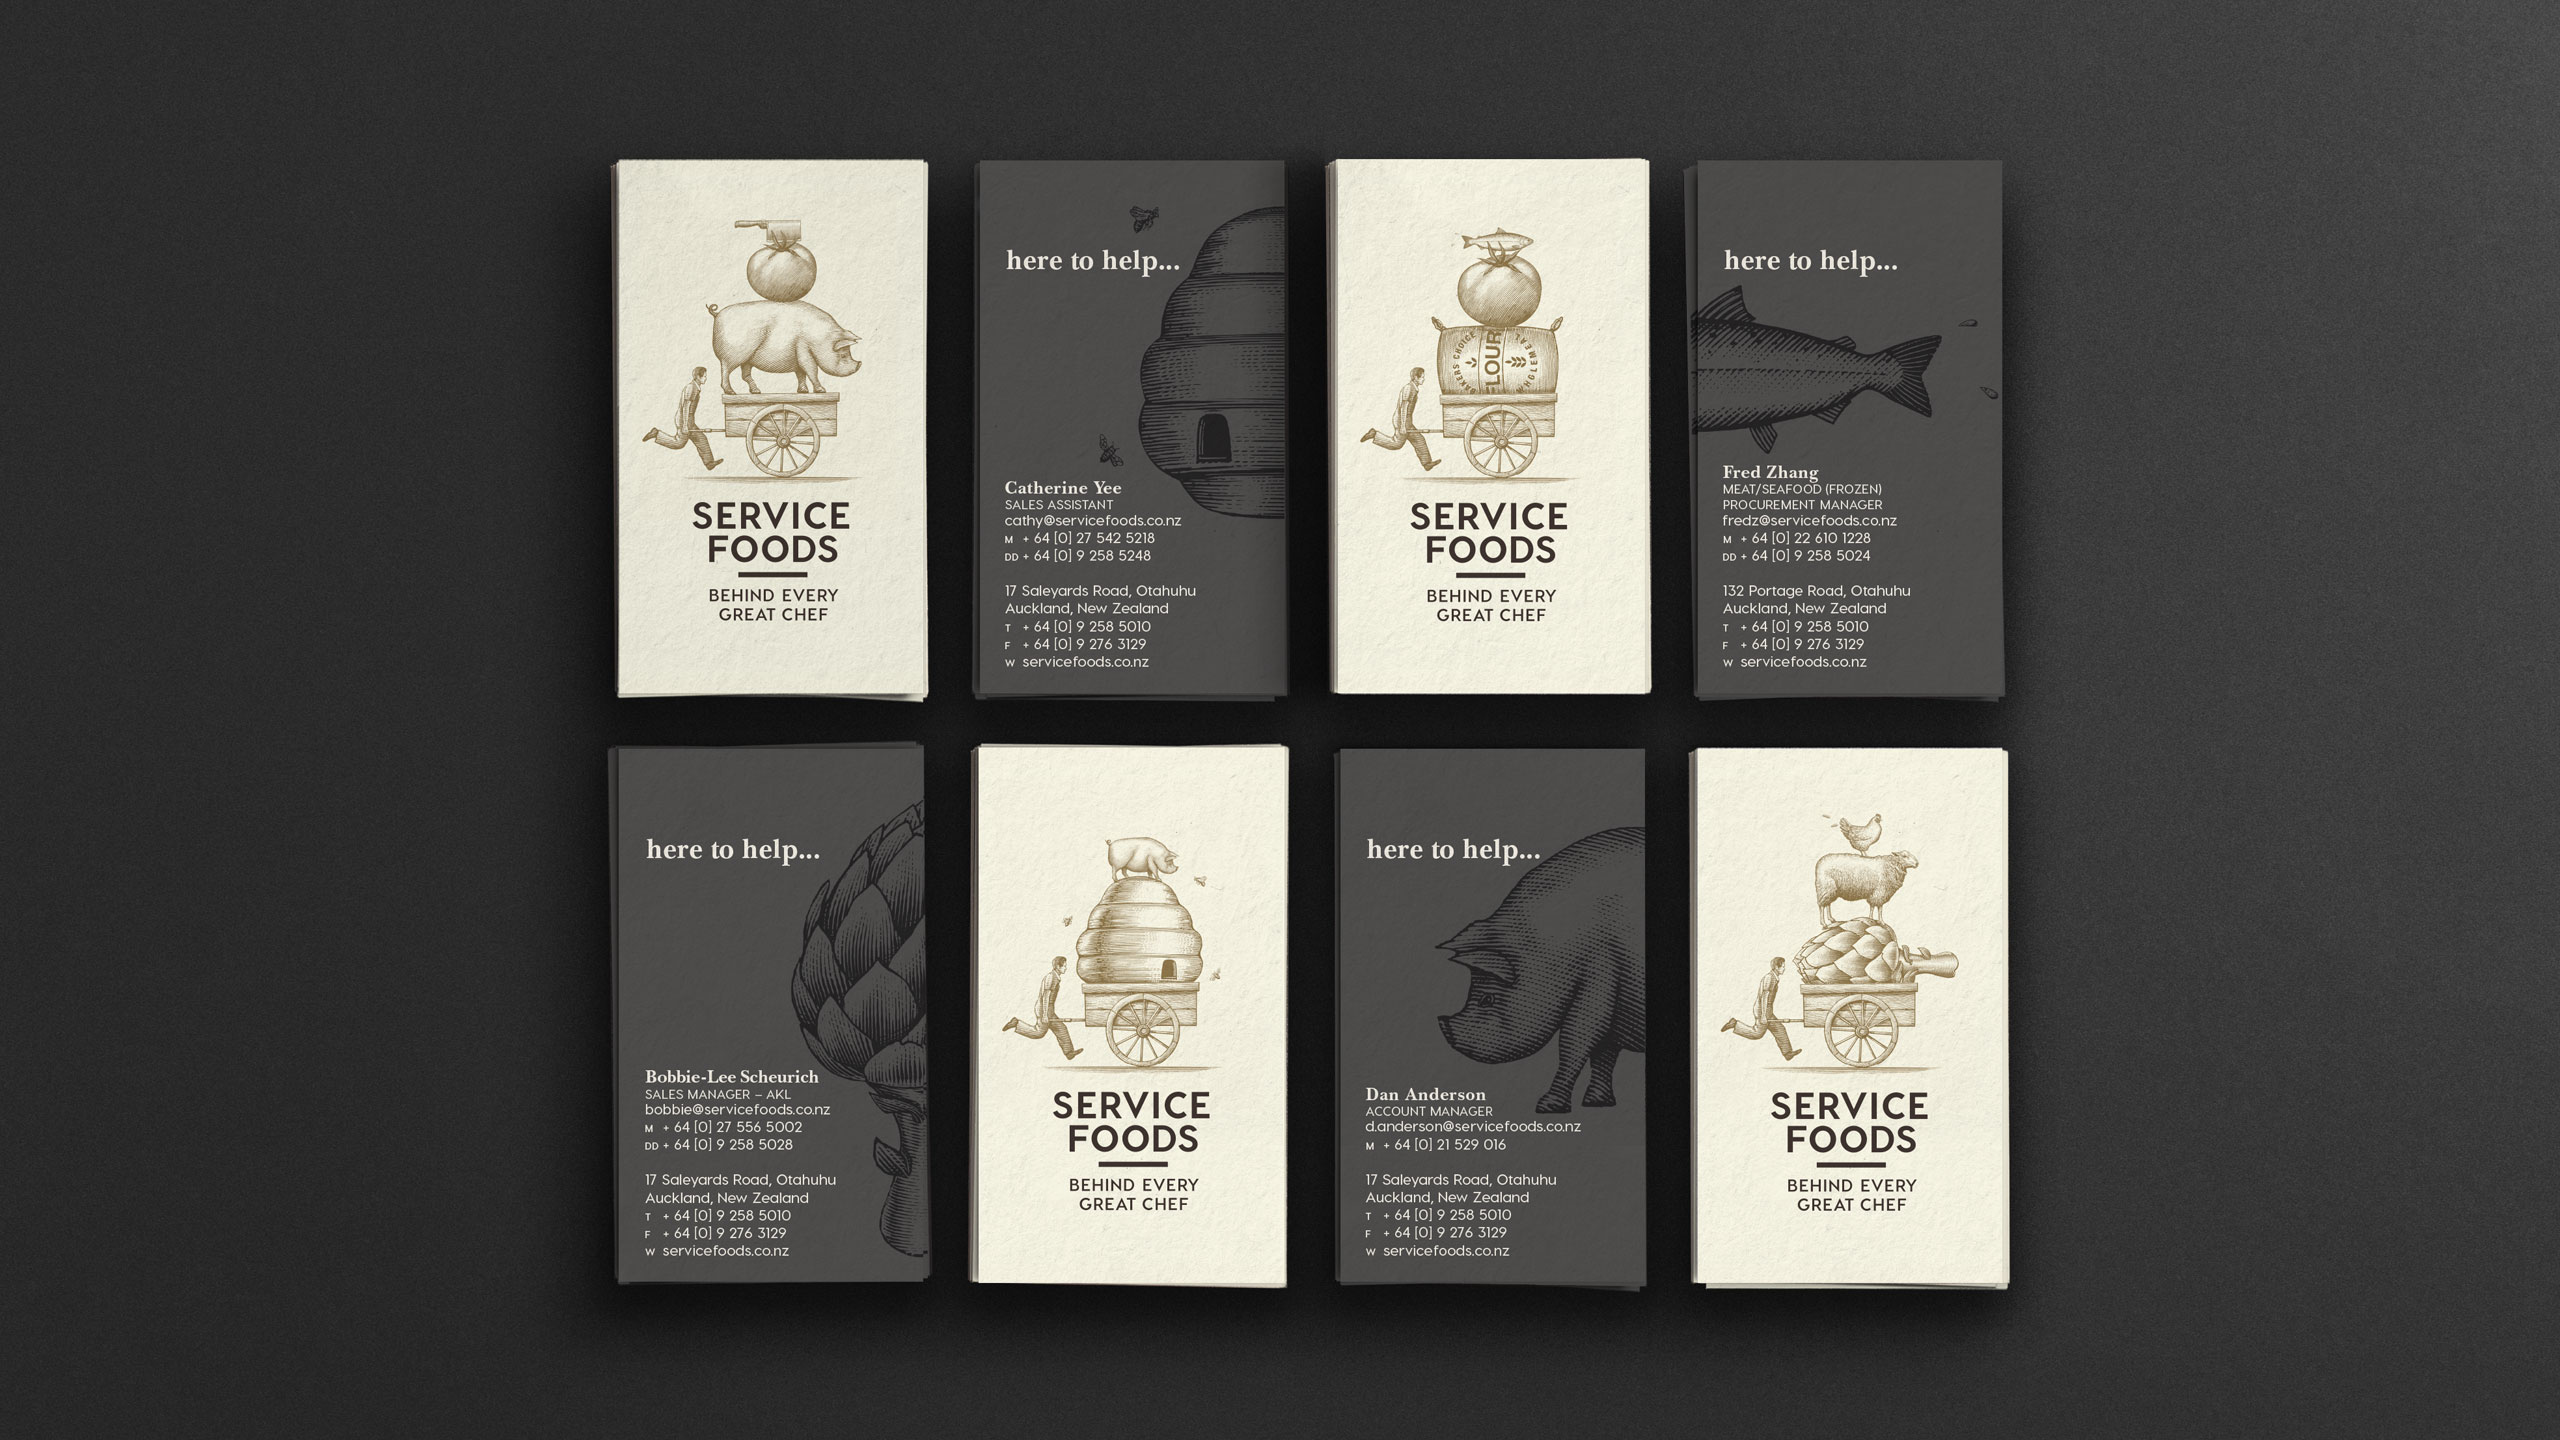 tried-and-true-design-auckland-service-foods-rebrand-business-cards